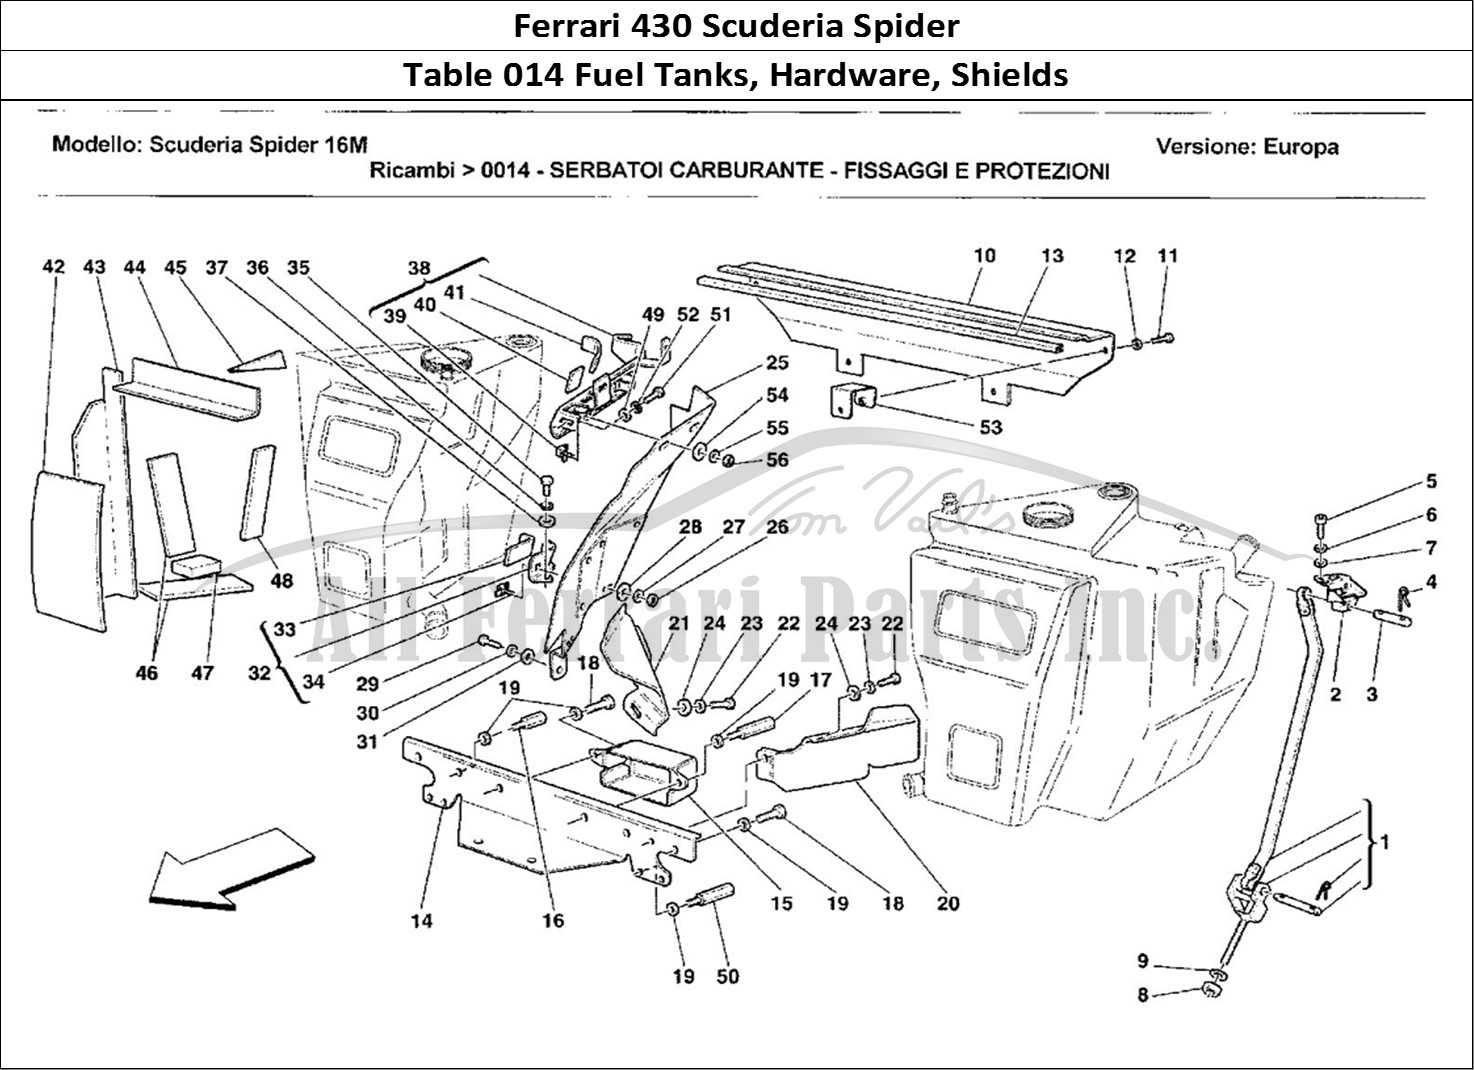 Ferrari Parts Ferrari 430 Scuderia Spider 16M Page 014 Serbatoi Carburante - Fis